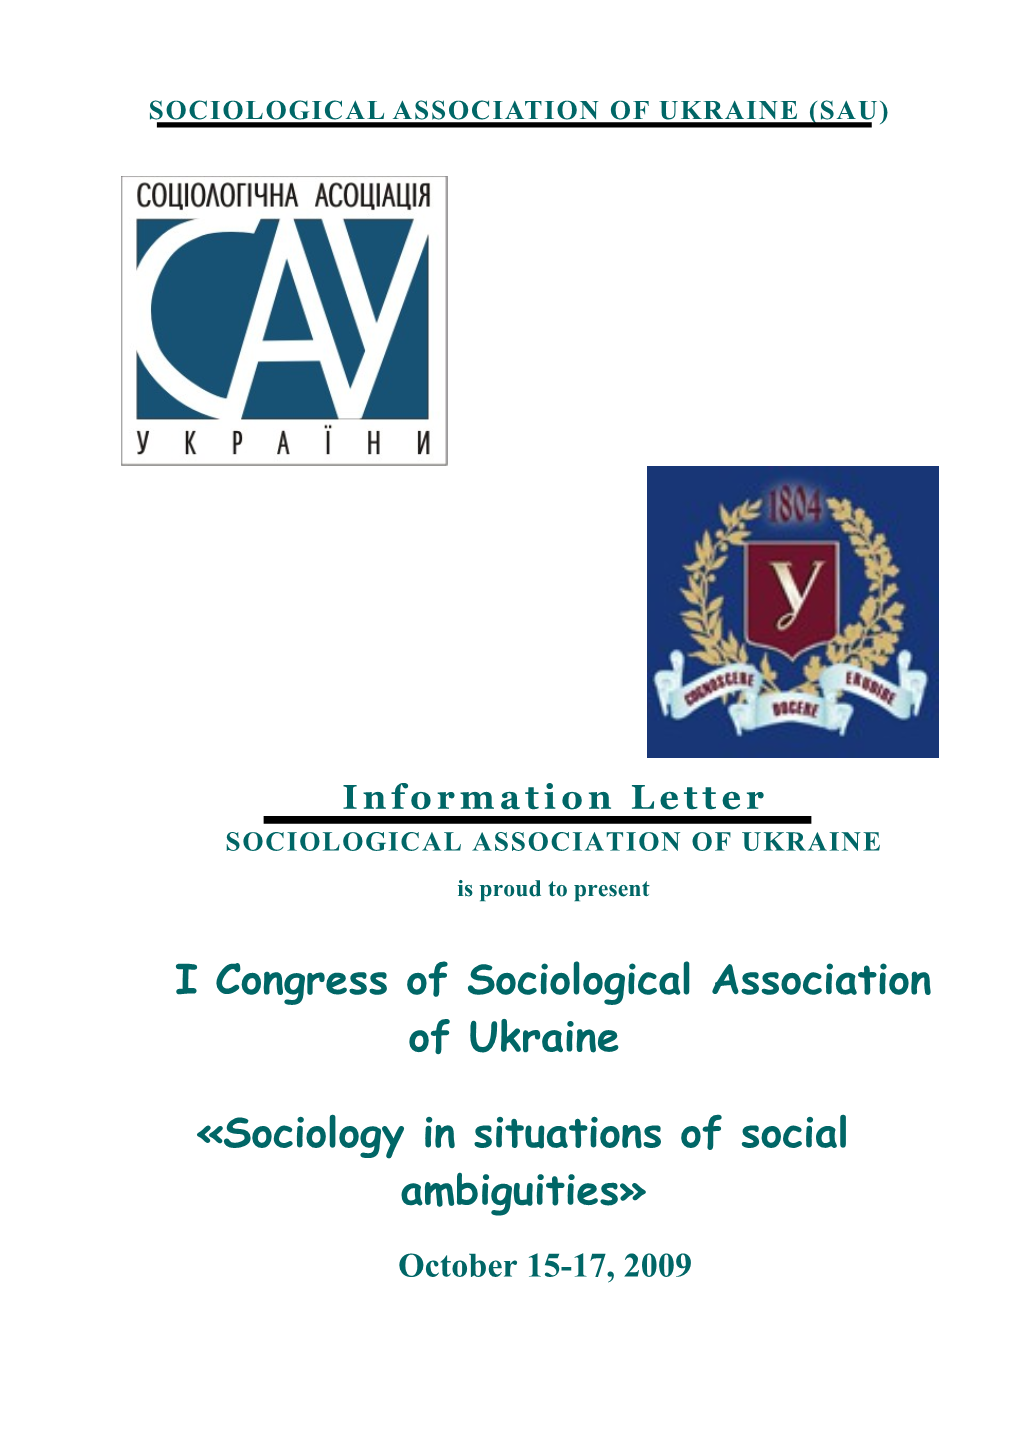 Sociological Association of Ukraine (Sau)